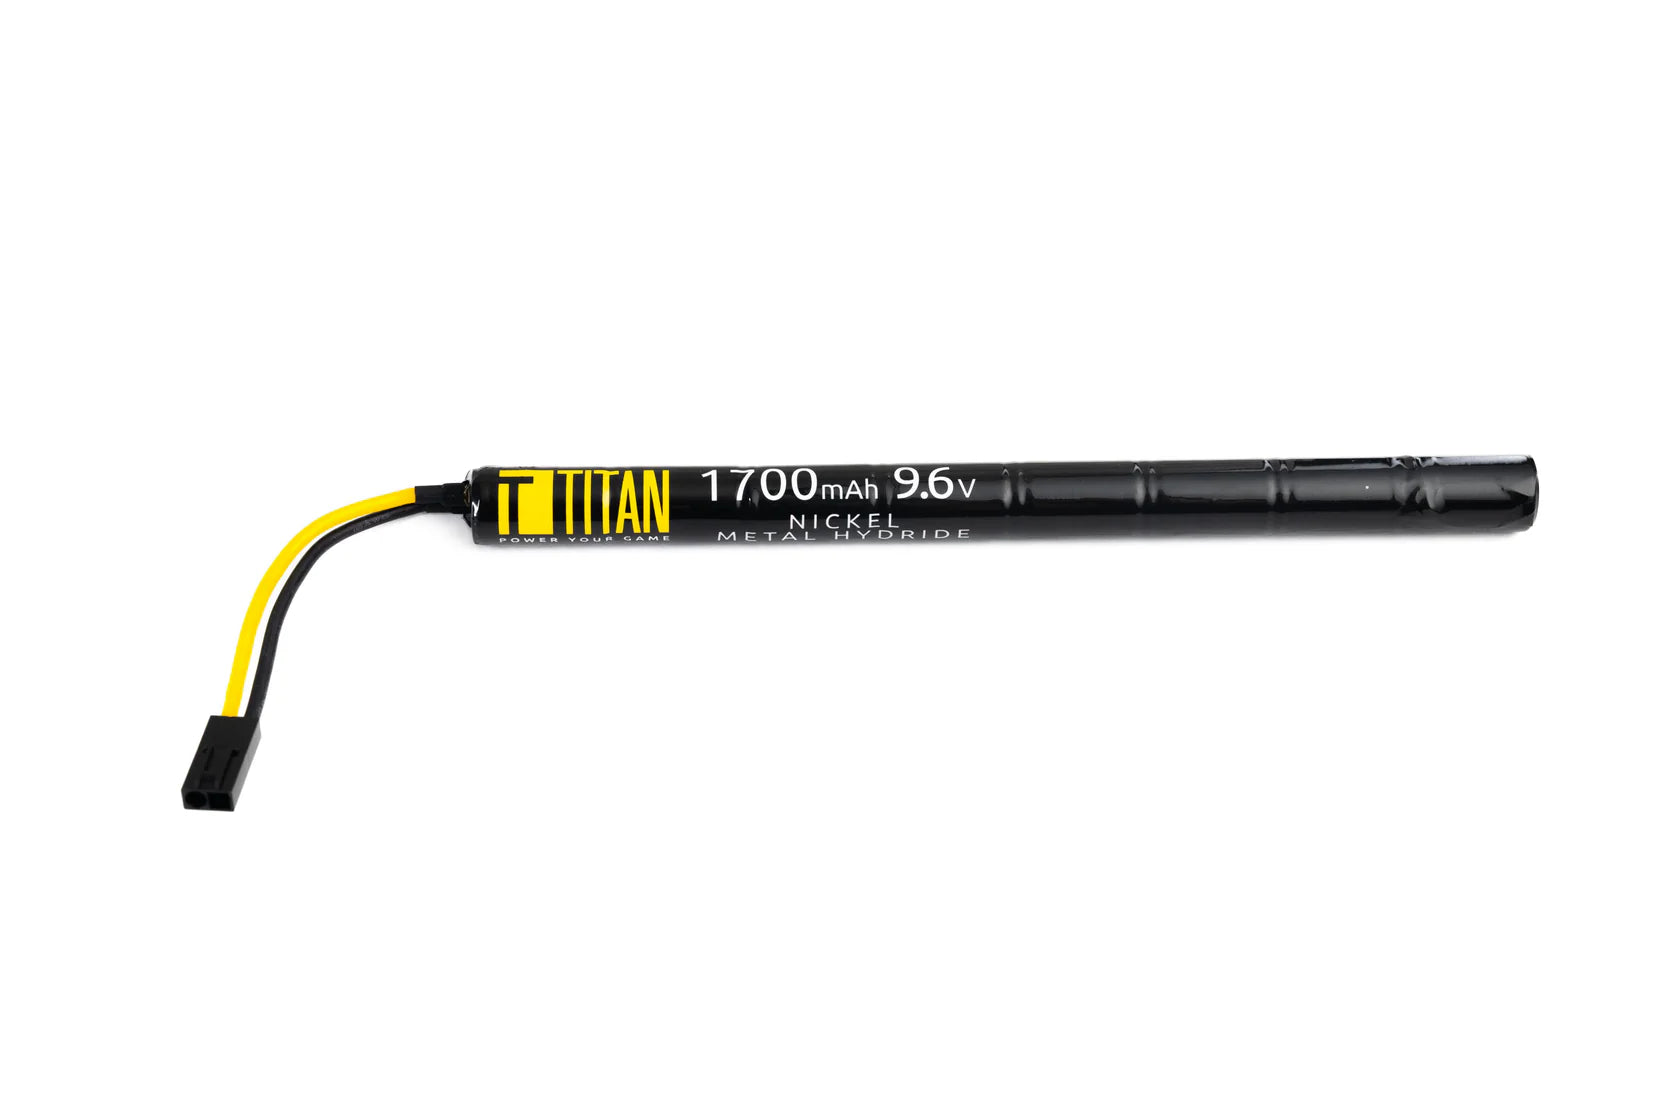 Titan Power NiMh 1700mAh 9.6v Stick - Tamiya